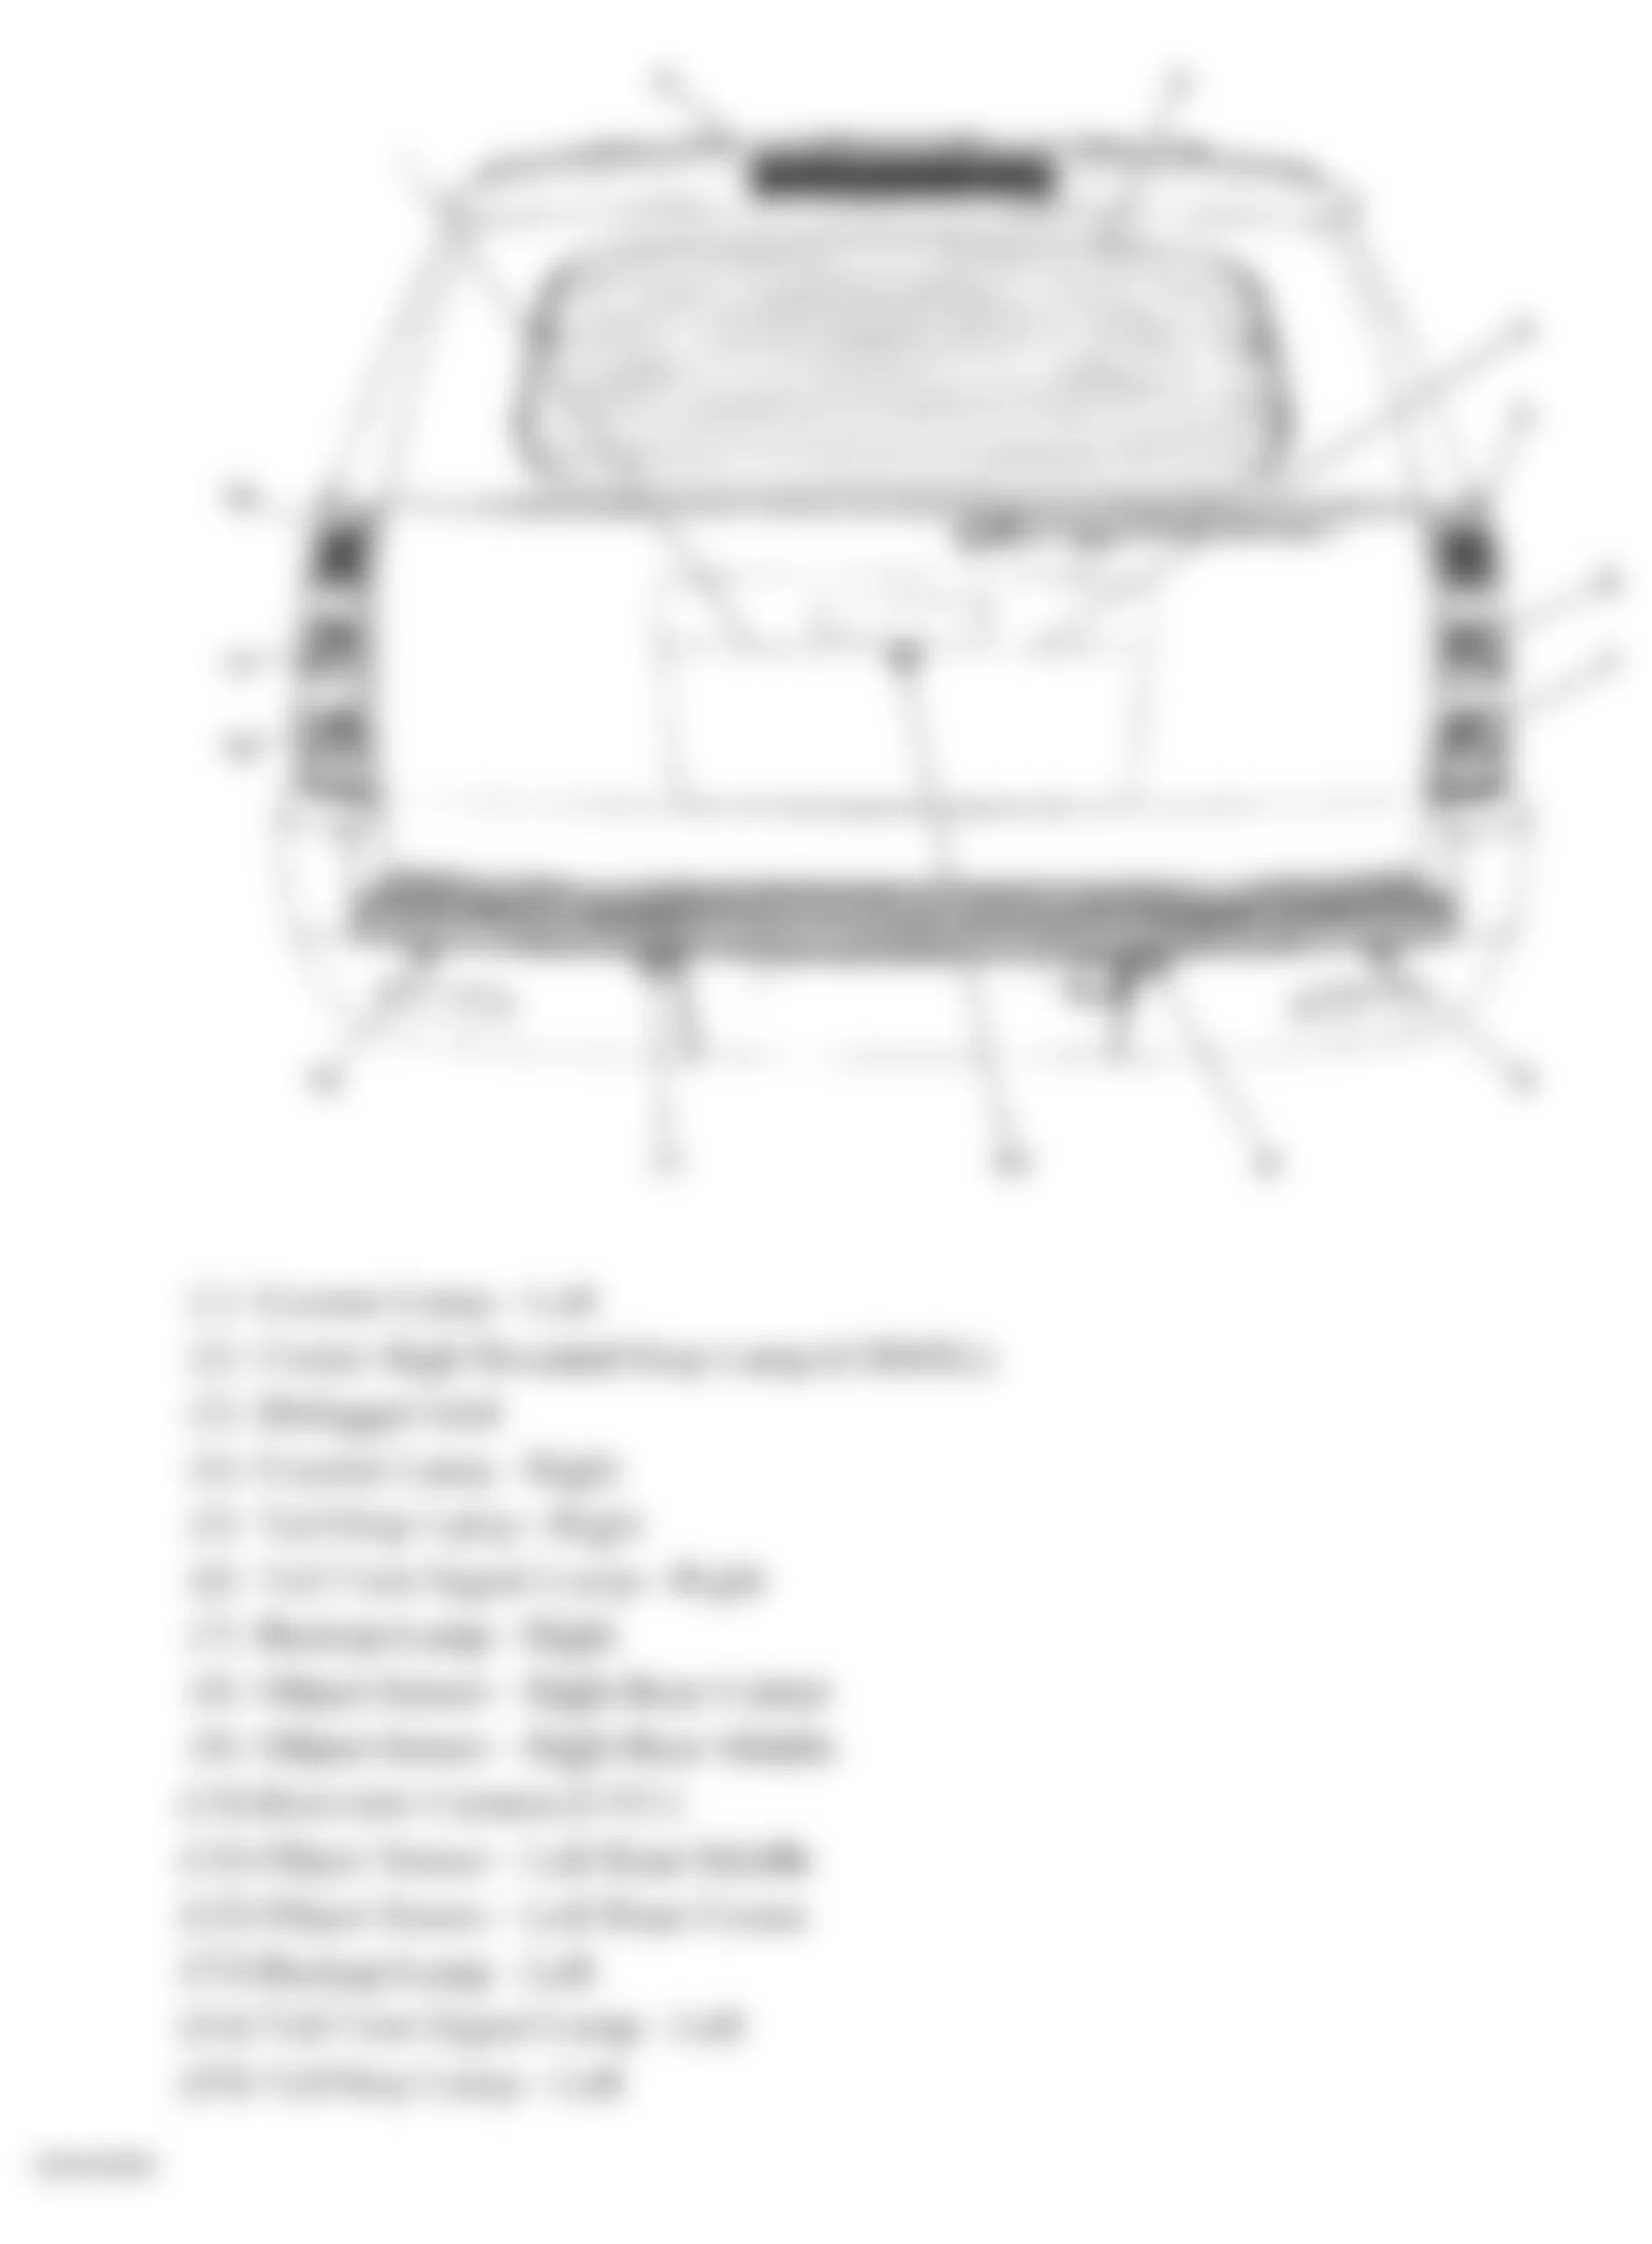 GMC Yukon XL C1500 2009 - Component Locations -  Rear Of Vehicle (Yukon W/One Piece Liftgate)